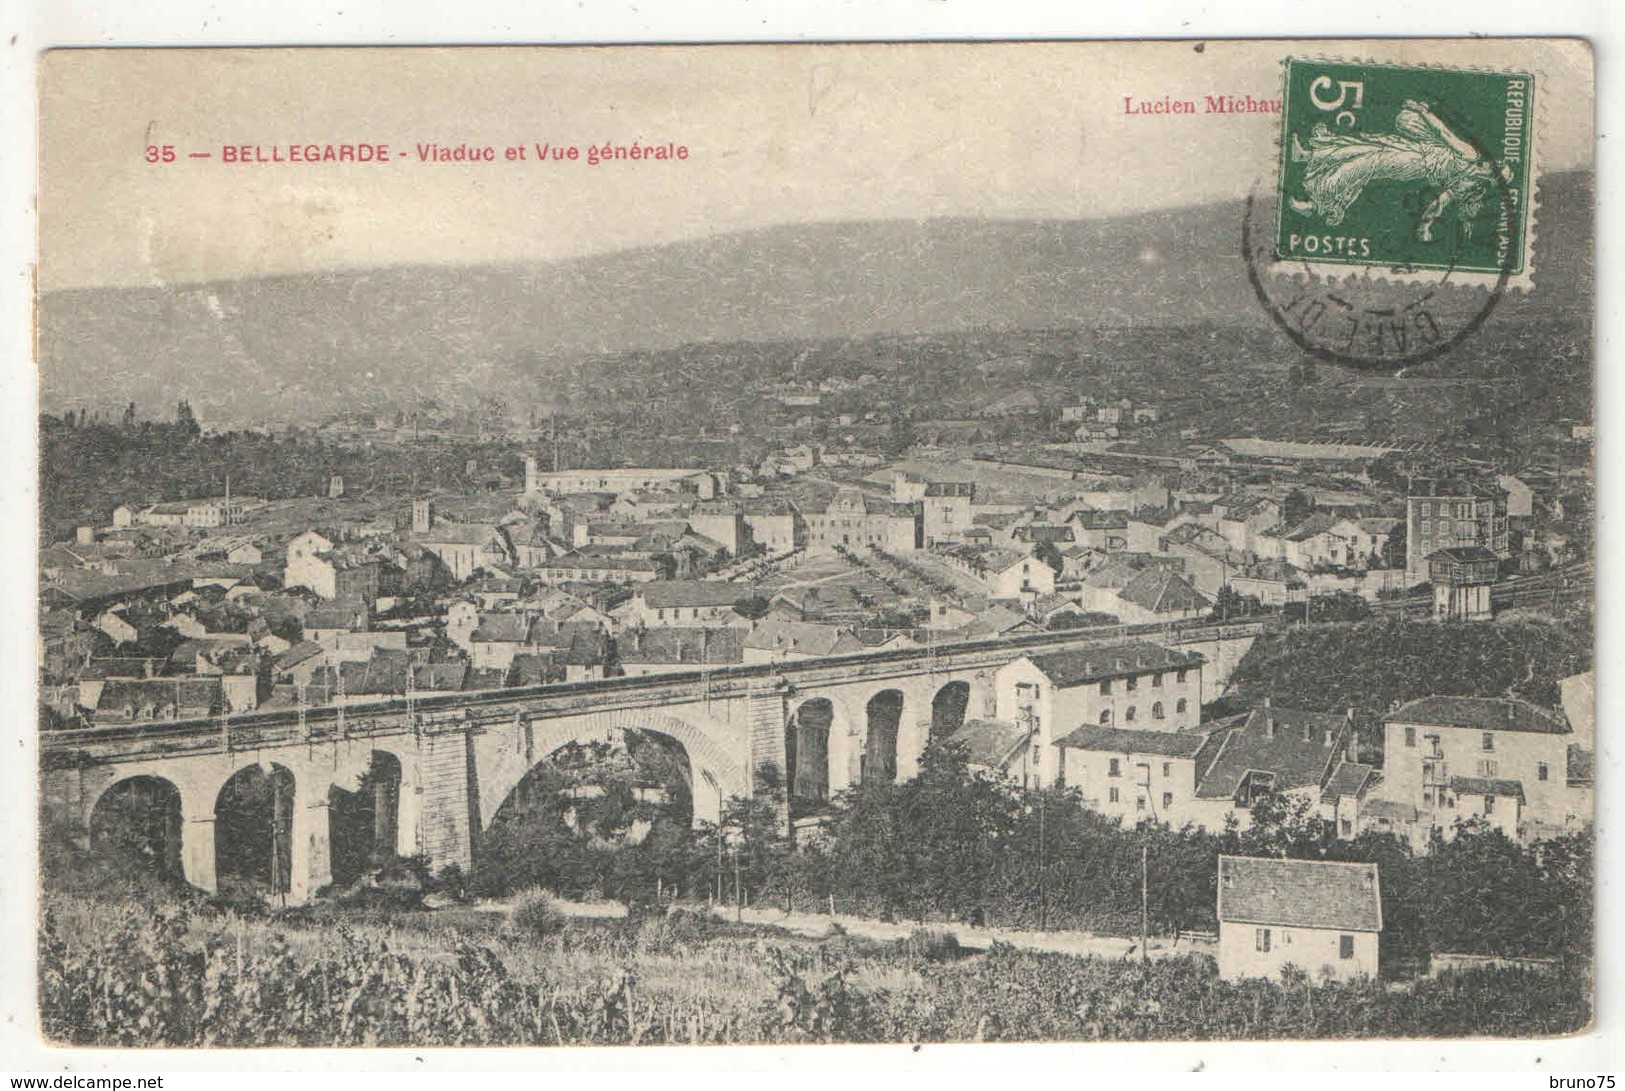 01 - BELLEGARDE - Viaduc Et Vue Générale - LM 35 - 1908 - Bellegarde-sur-Valserine